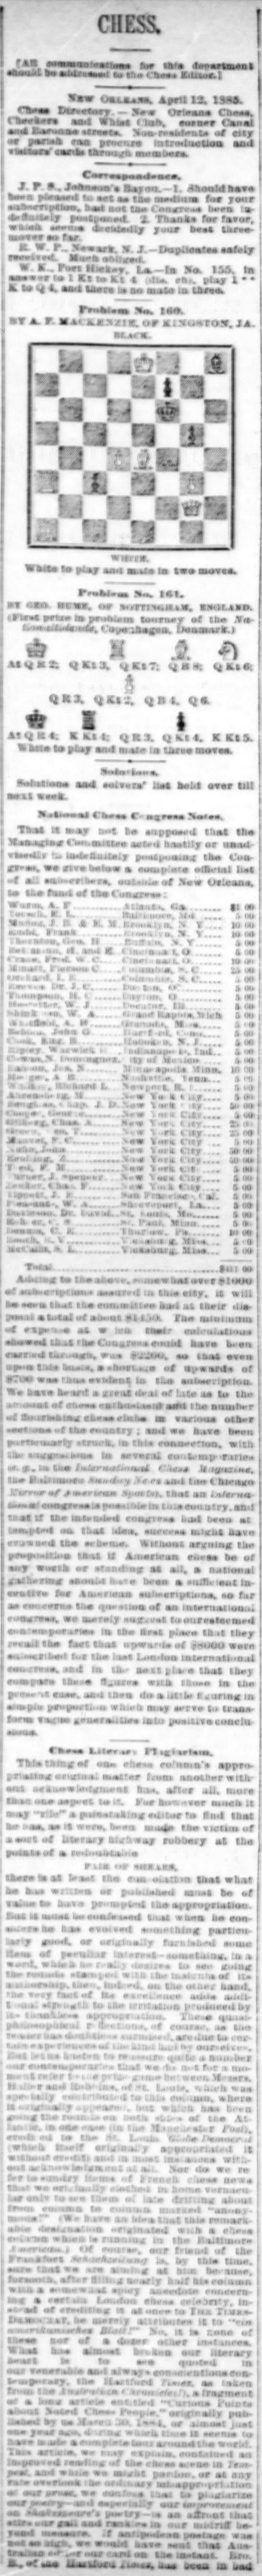 1885.04.12-01 New Orleans Times-Democrat.jpg